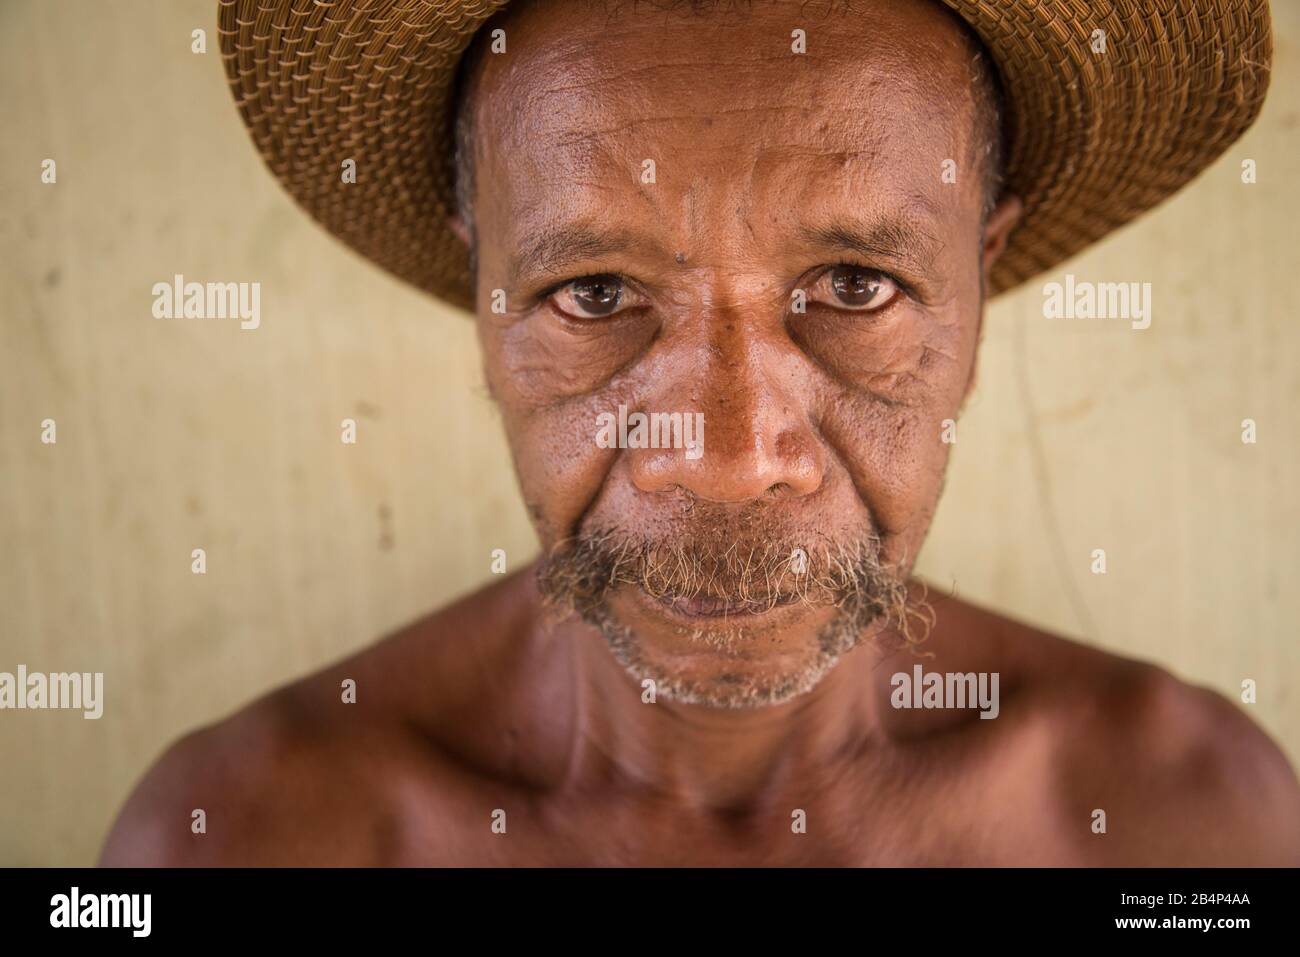 Barra de Aroeira, Santa Tereza do Tocantins, Tocantins, Brazil - May 6, 2016: Portrait of a quilombola man wearing a straw hat Stock Photo